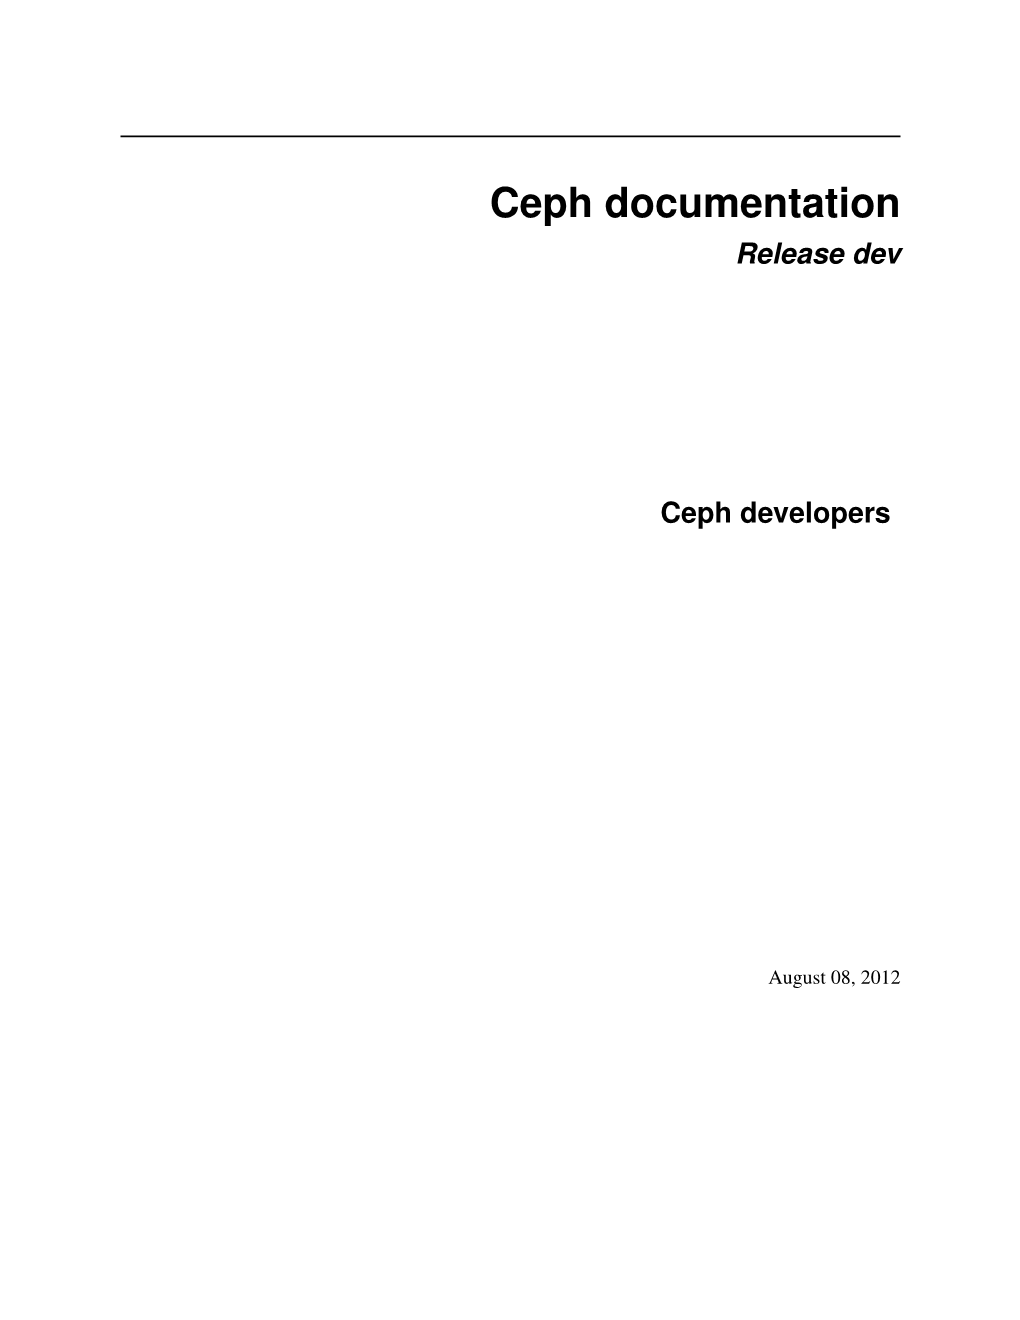 Ceph Documentation Release Dev